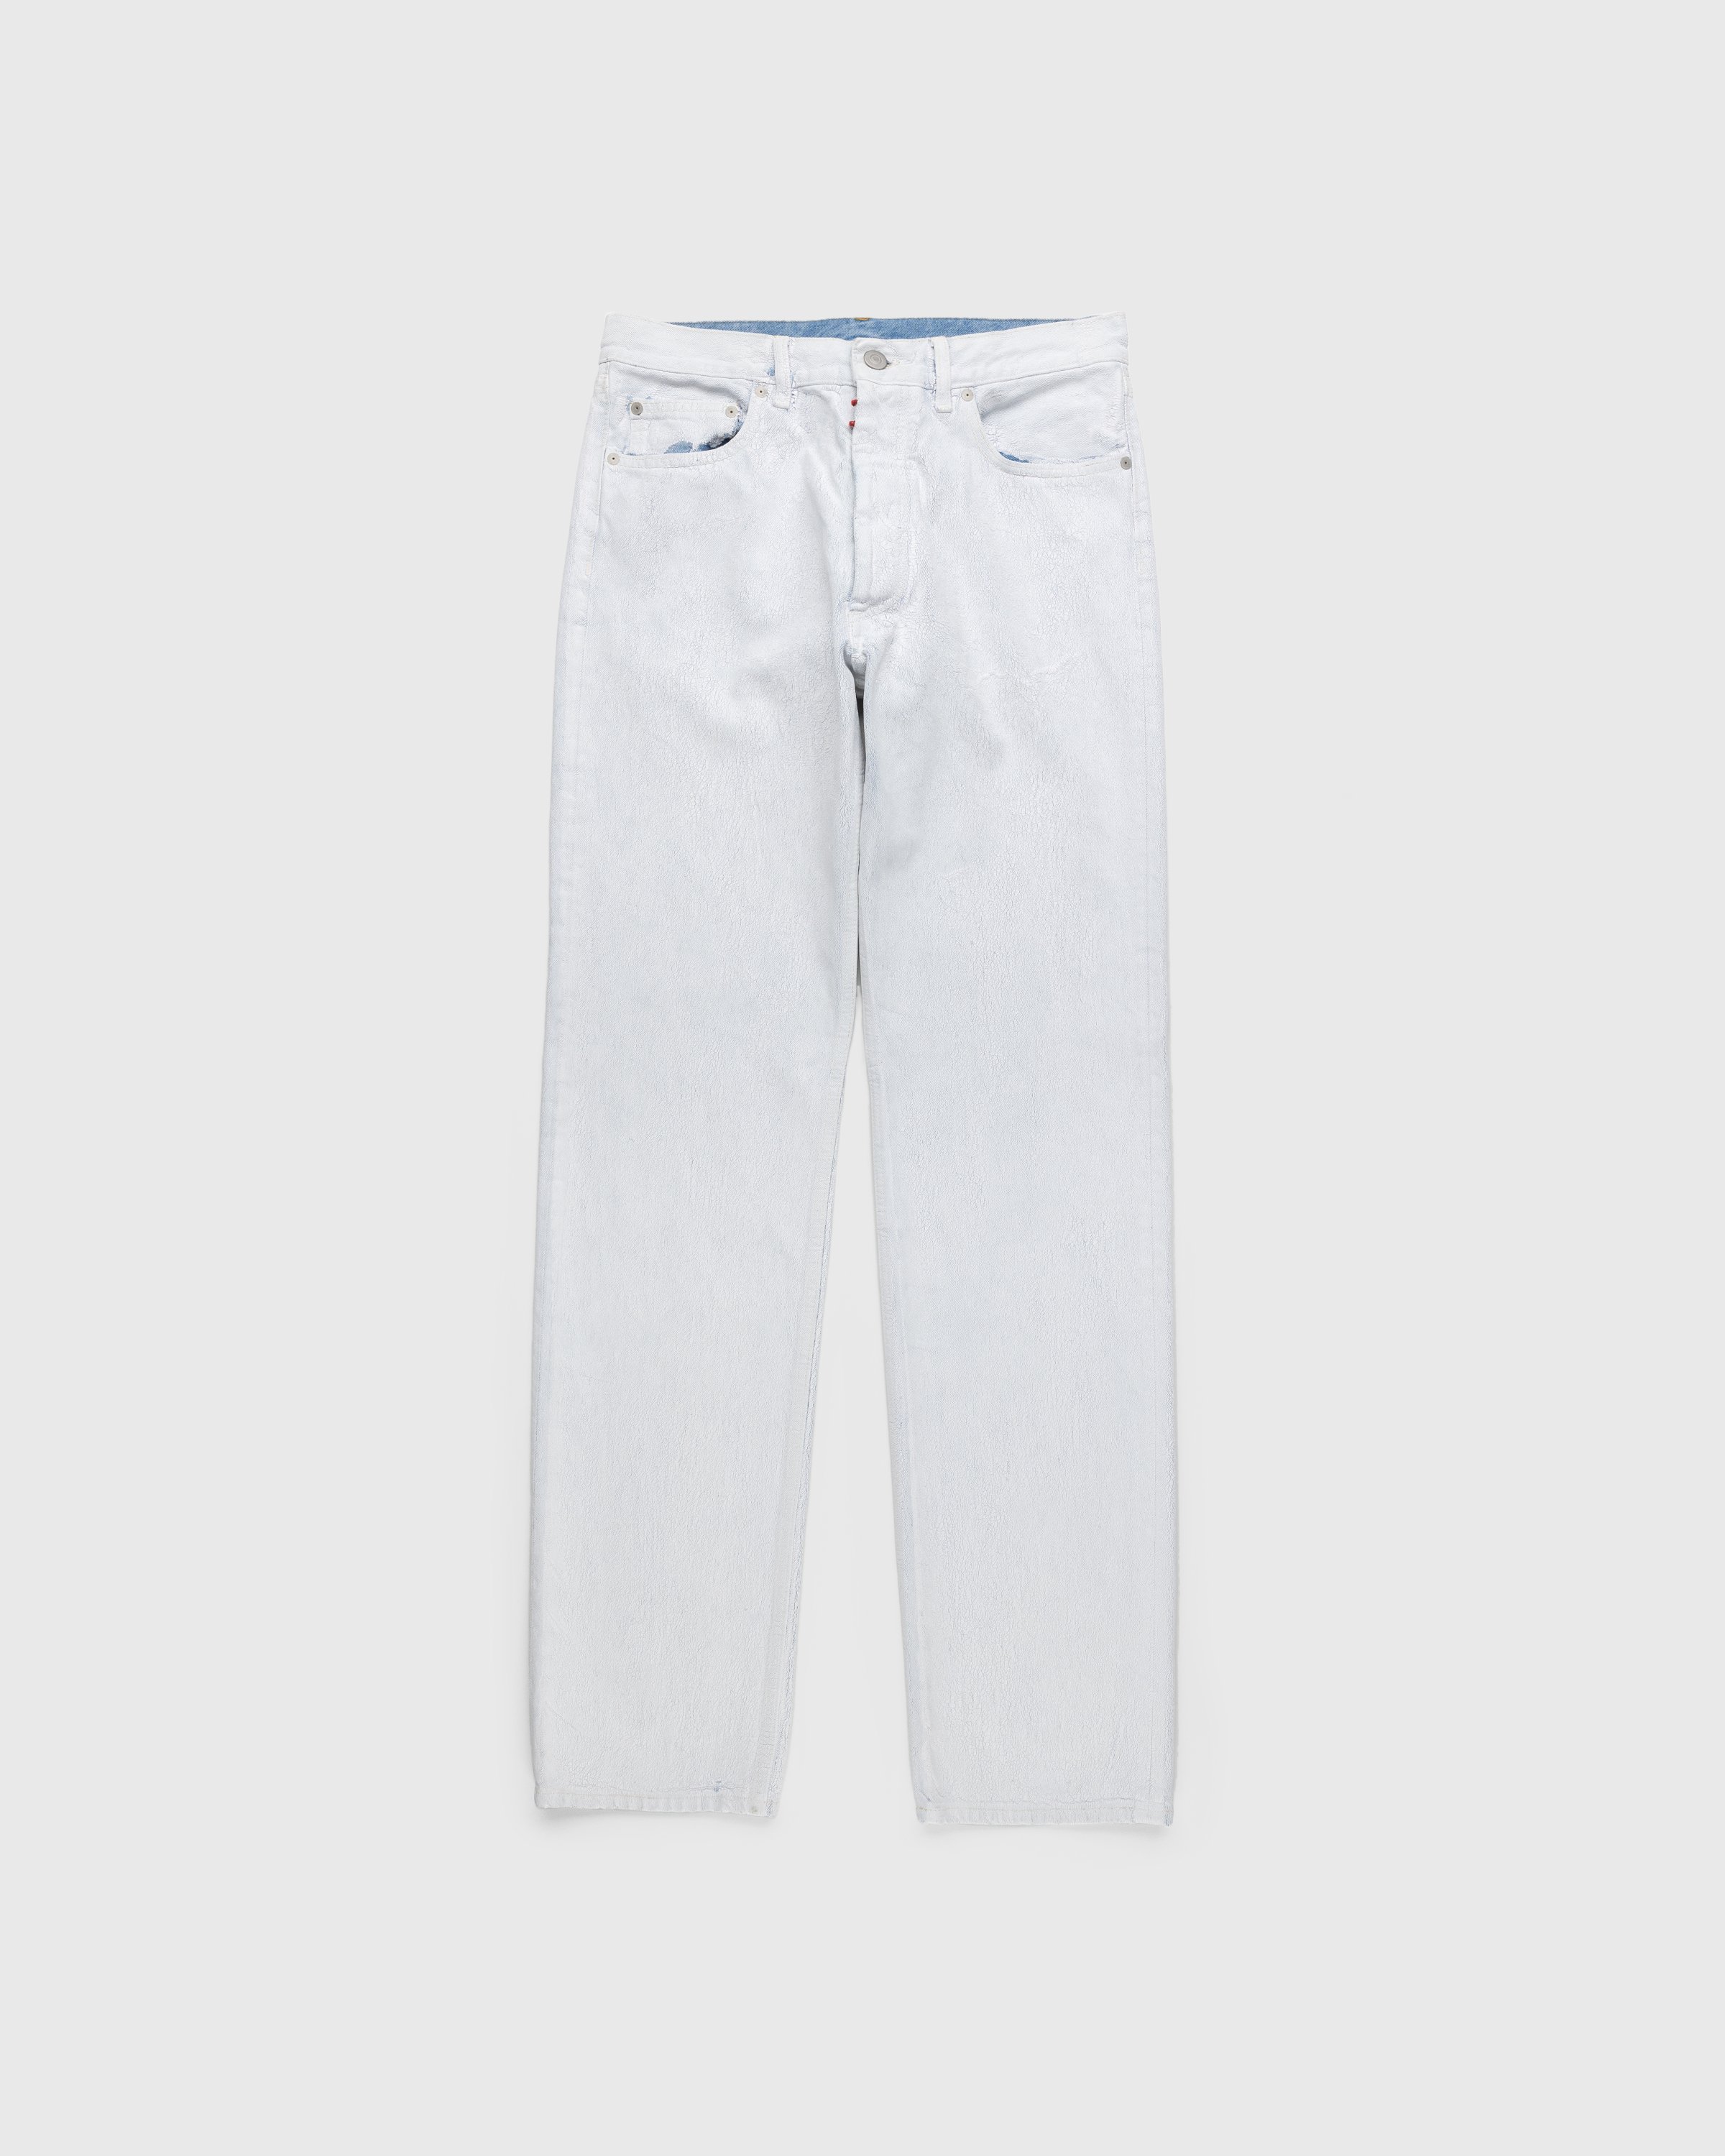 Maison Margiela – 5-Pocket Paint Jeans White | Highsnobiety Shop